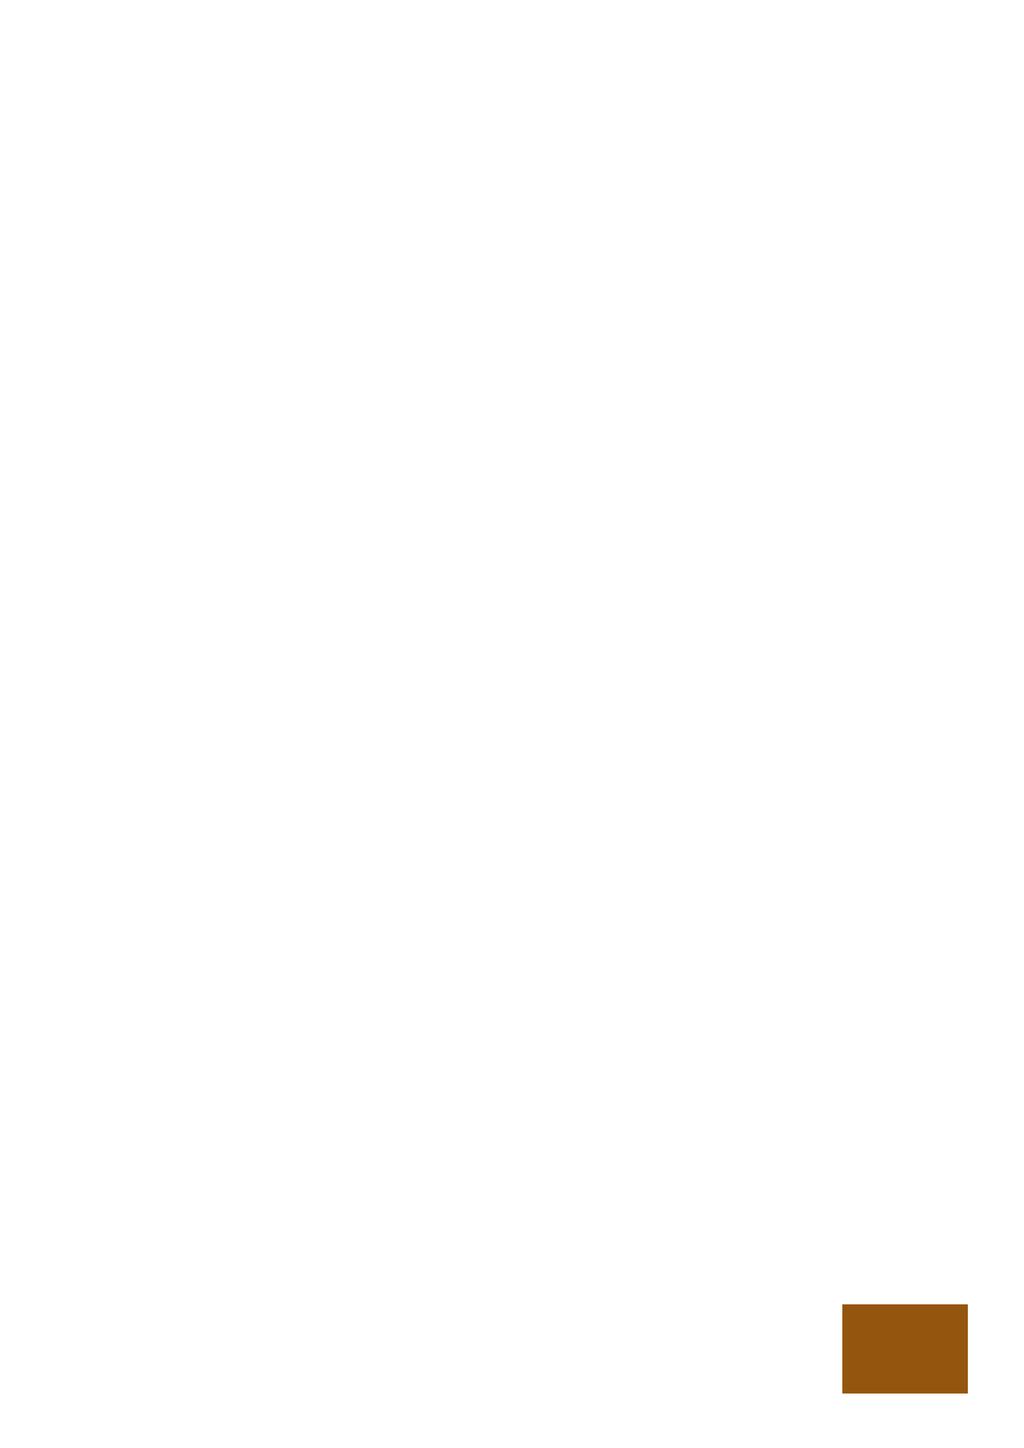 COOLED PLATE TESTS ON TEXTILE MATERIALS IN SIMULATED COCKPIT UNDER SOLAR RADIATION Kuklane, Kalev Published in: [Host publication title missing] Published: 2014-01-01 Link to publication Citation for